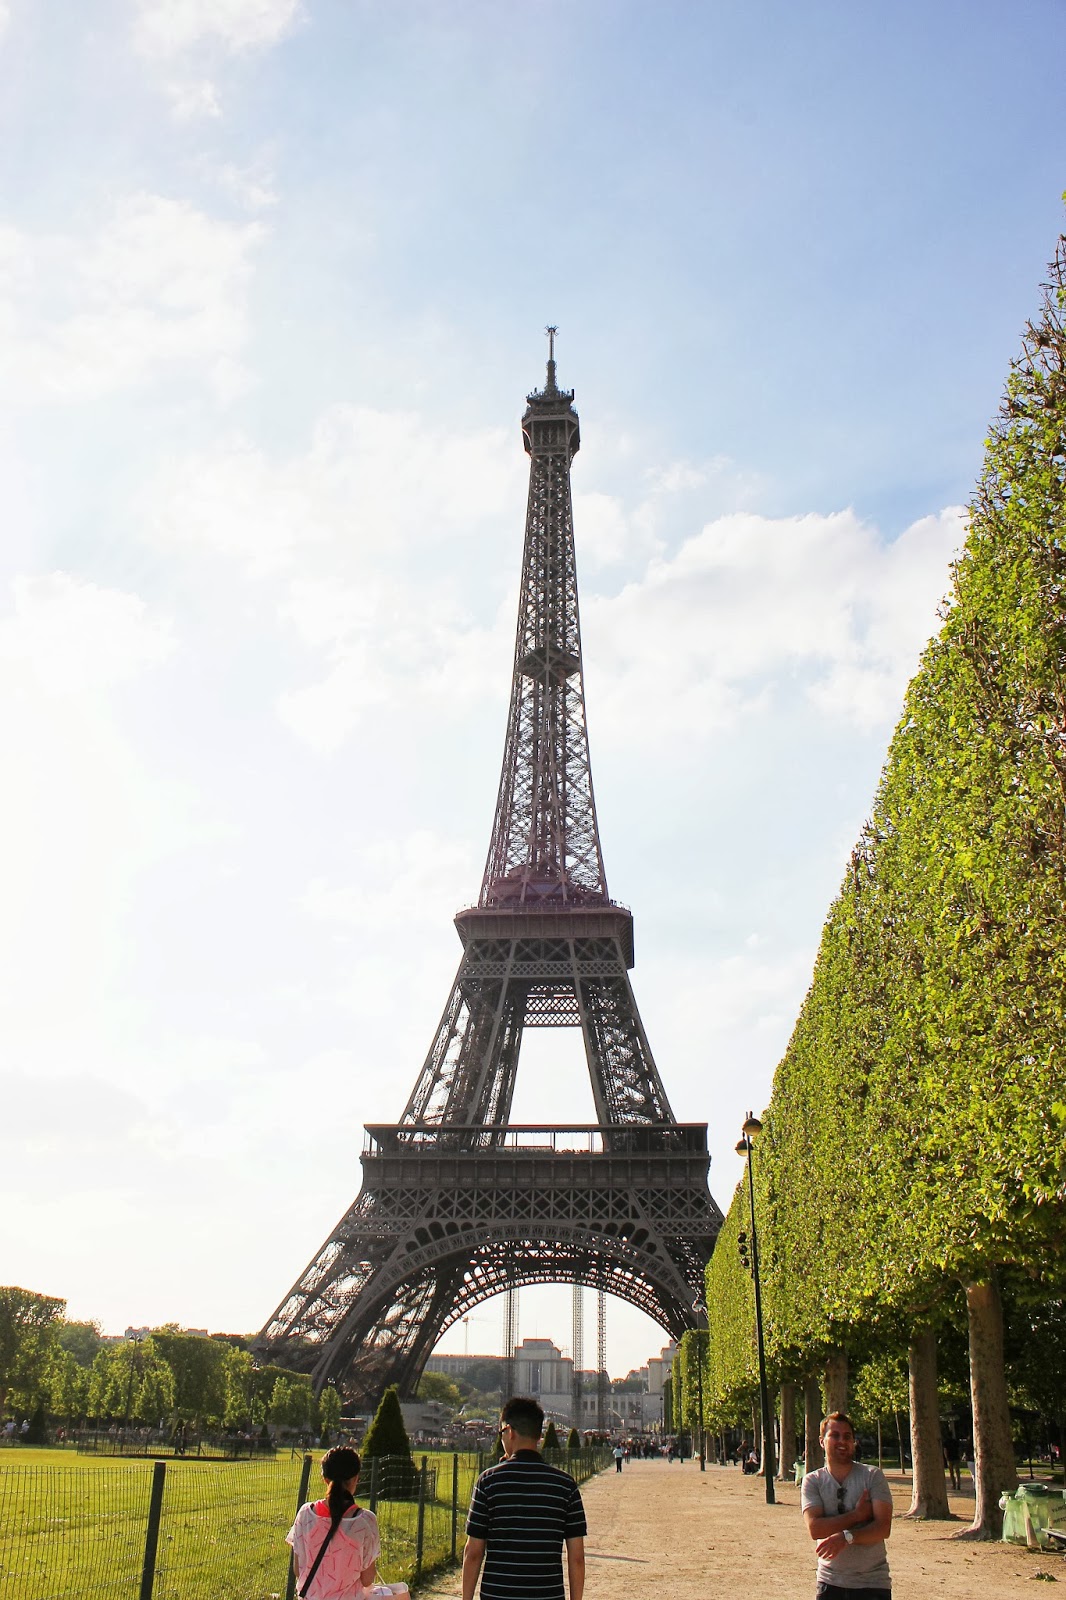 Paris Day 1: The Eiffel Tower